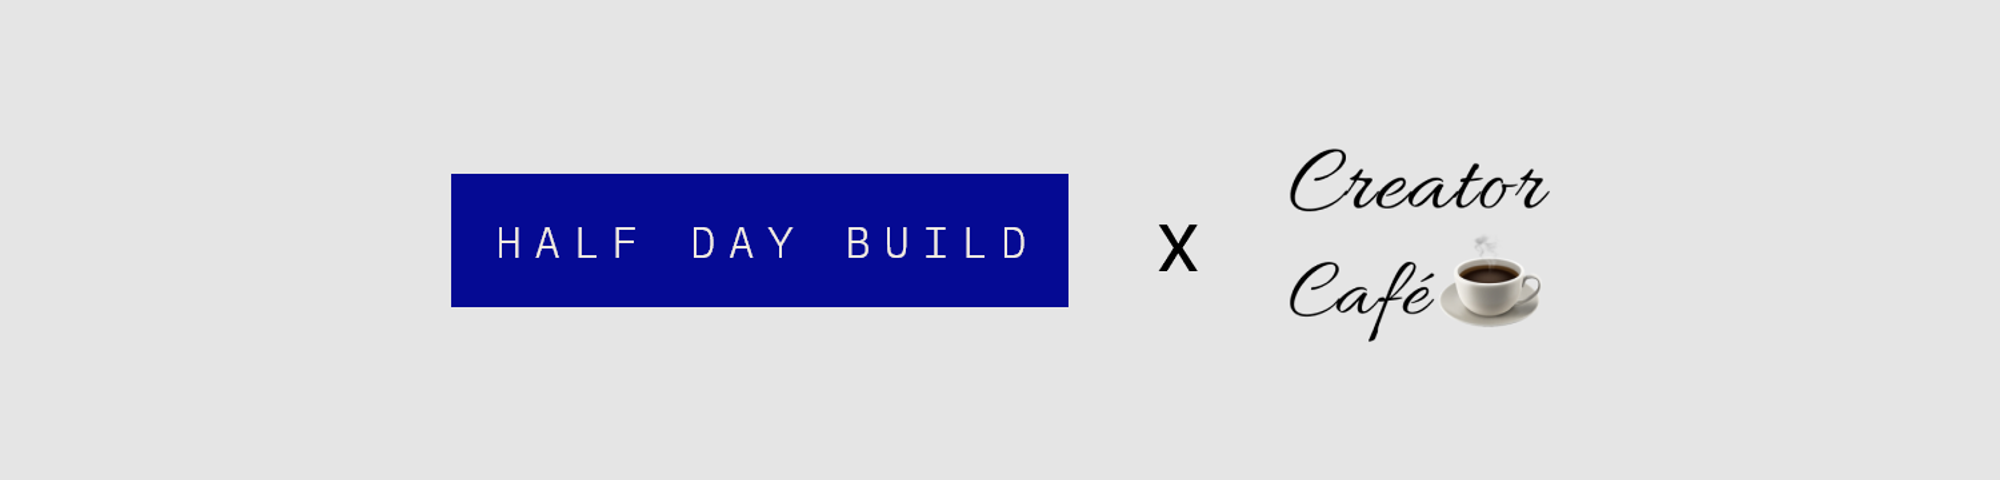 Half Day Build x Creator Cafe